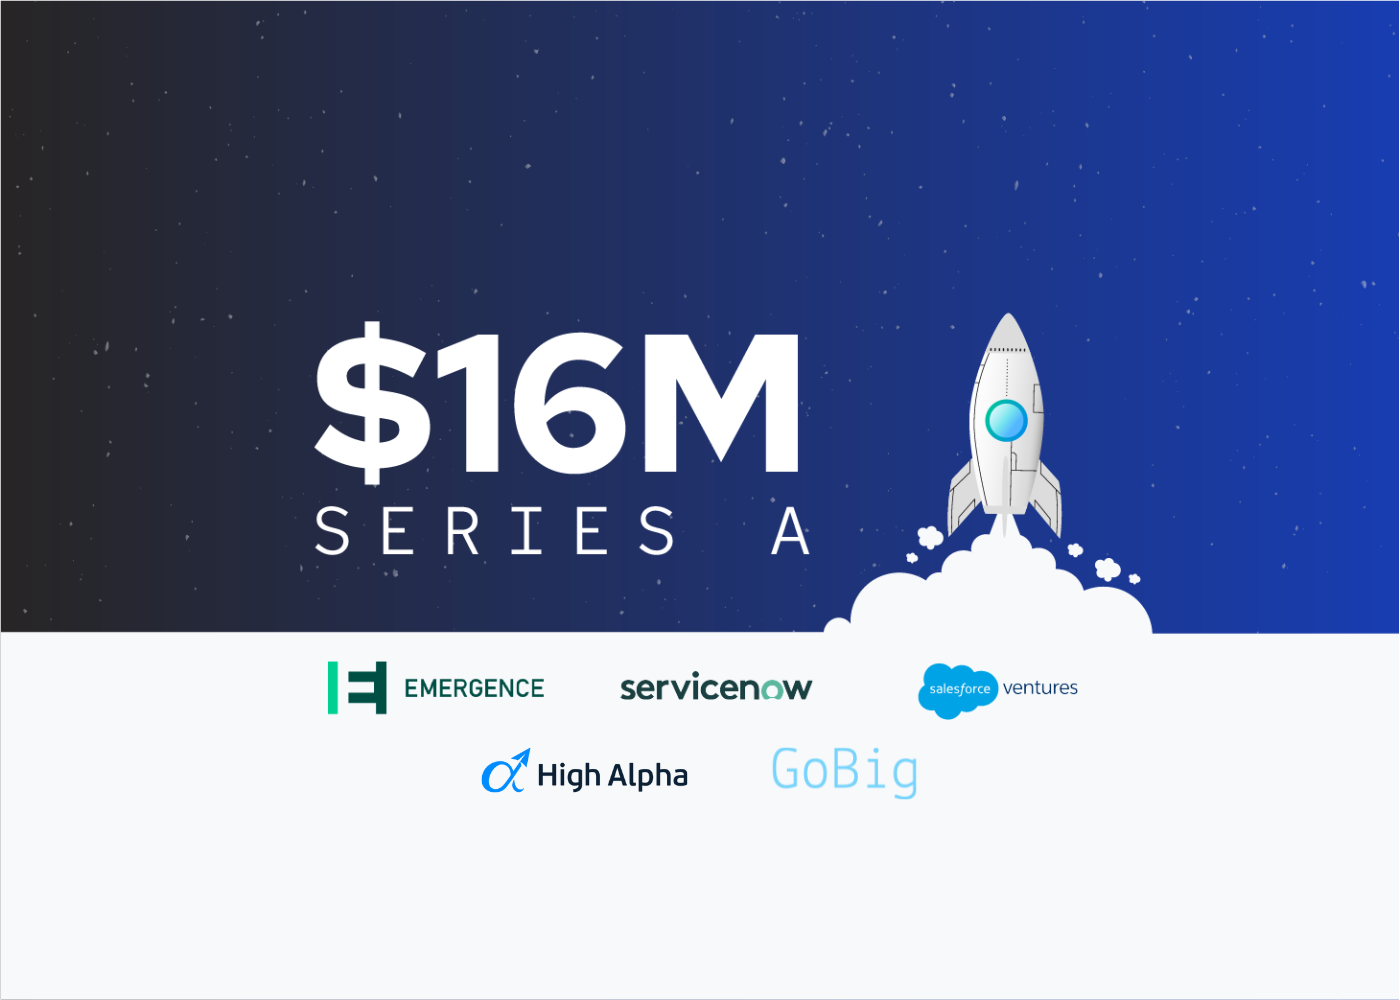 Logik.io Raises $16M Series A to Help Businesses Sell Simpler